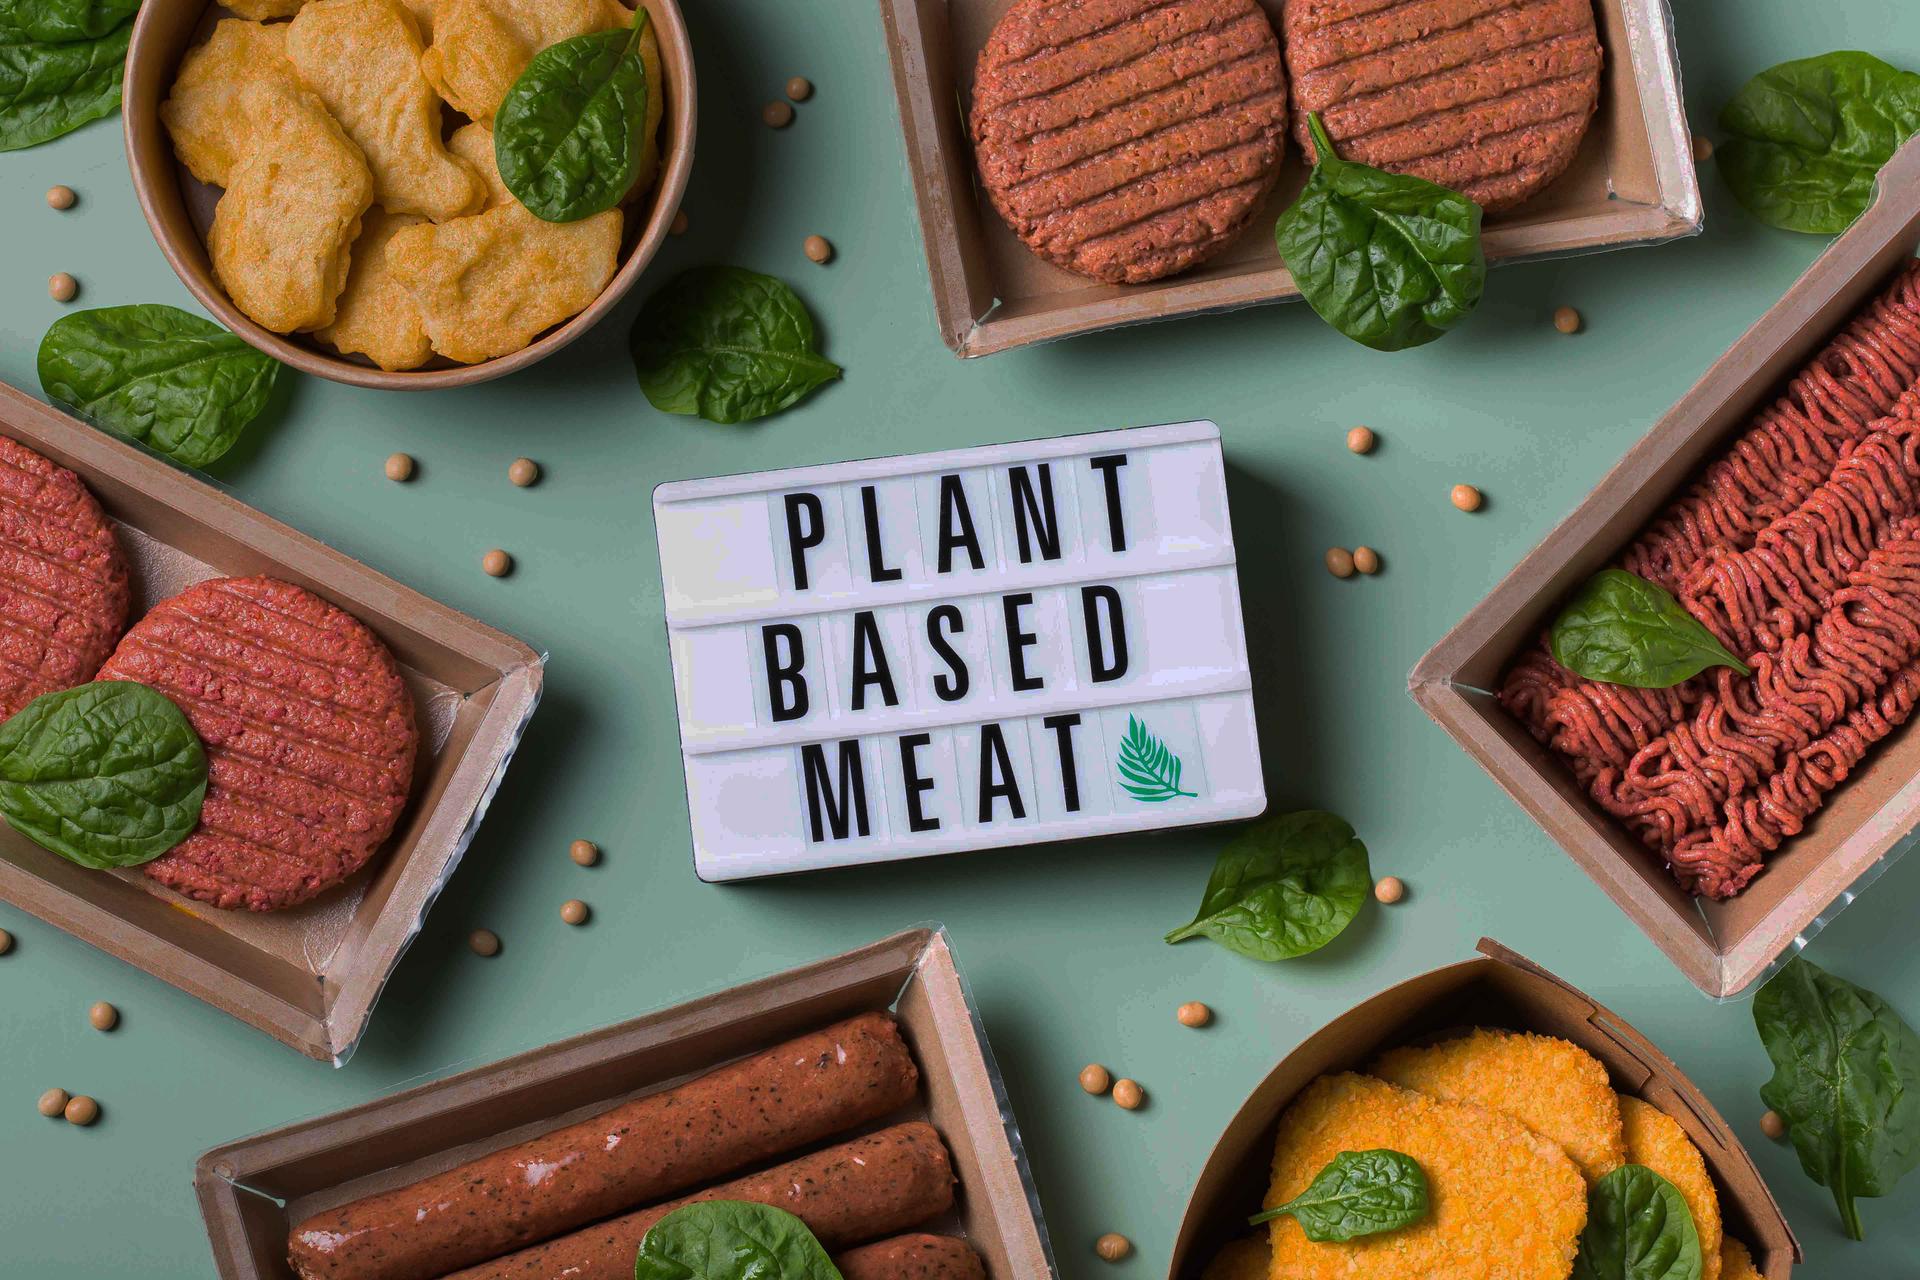 Plant based meat alternatives